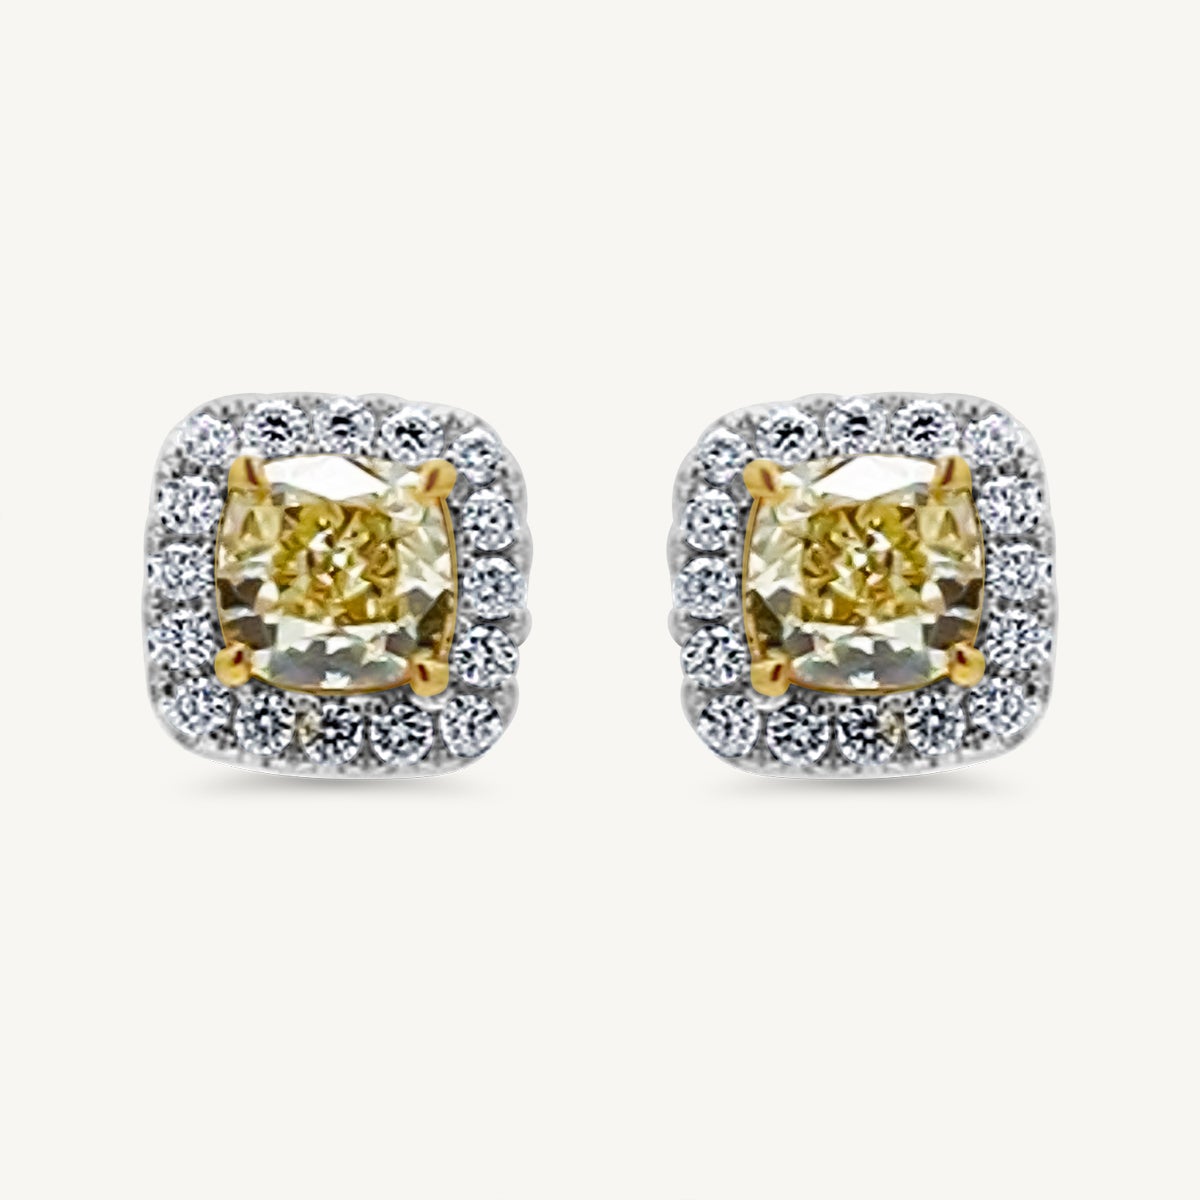 GIA Certified Natural Yellow Cushion Diamond 2.23 Carat TW Gold Earrings